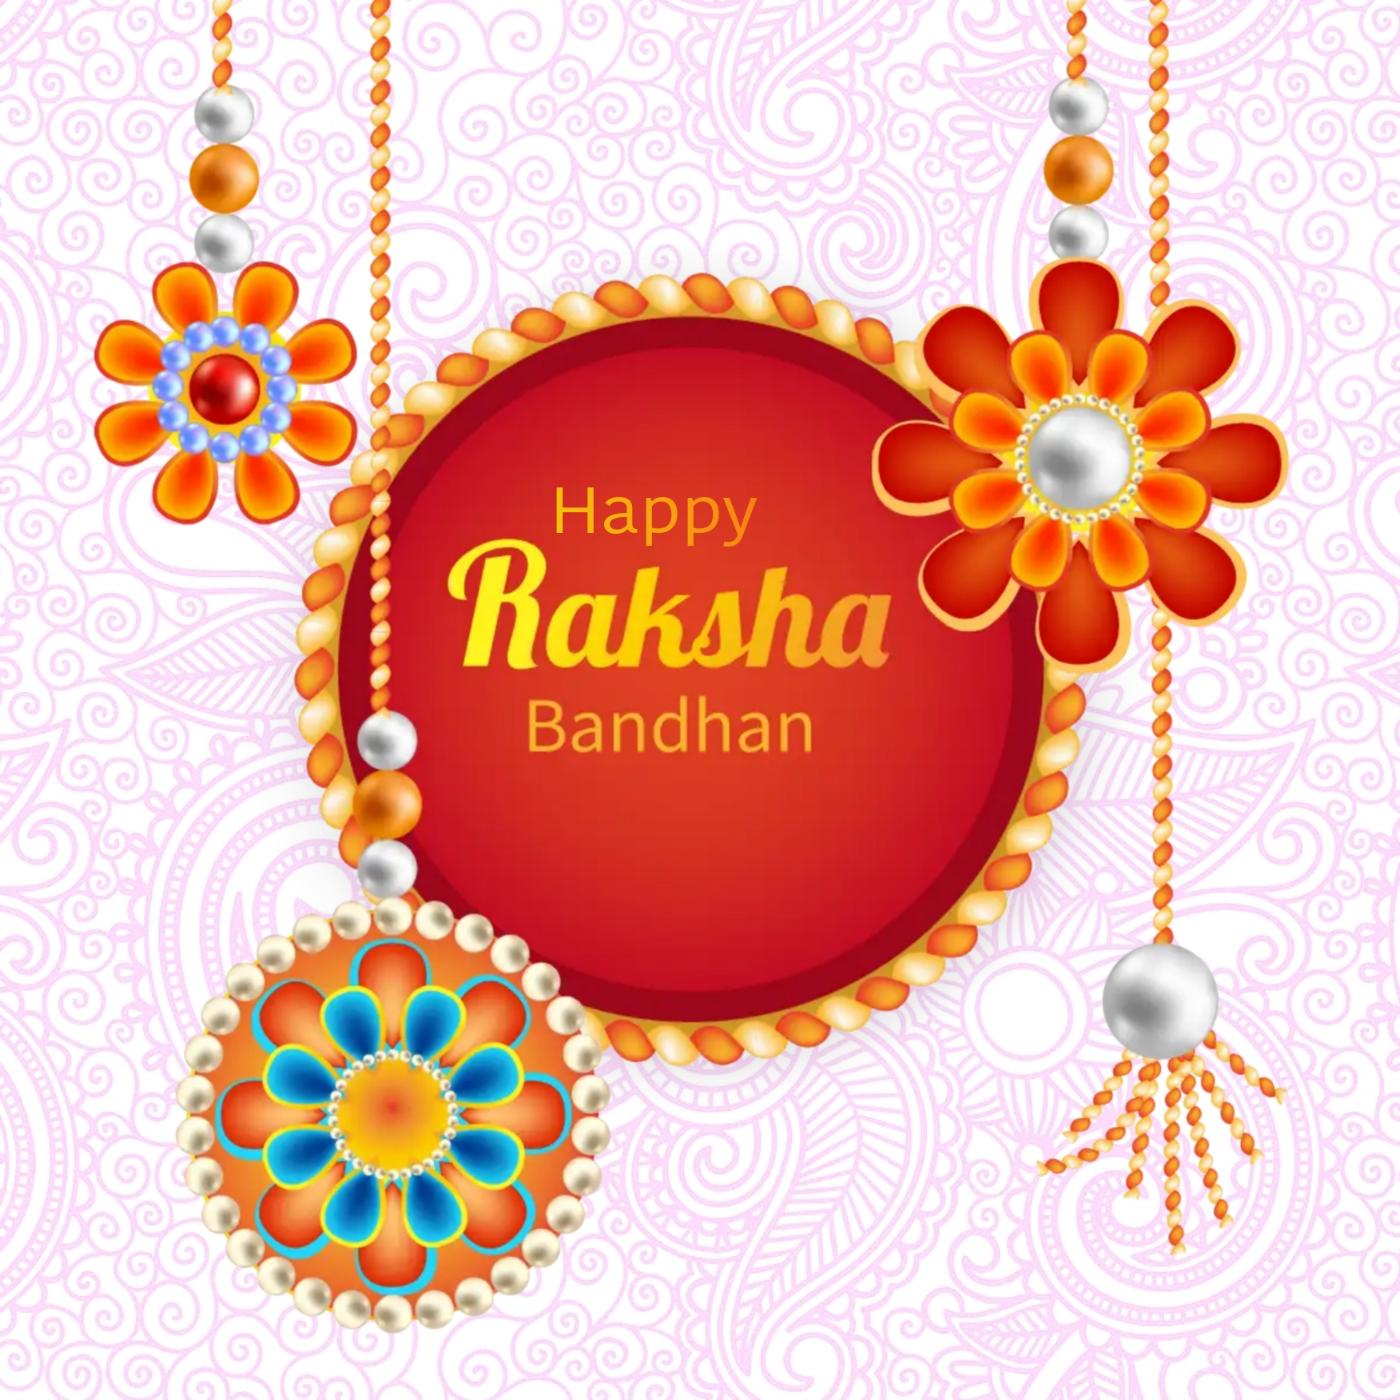 Happy Raksha Bandhan 2022 Images